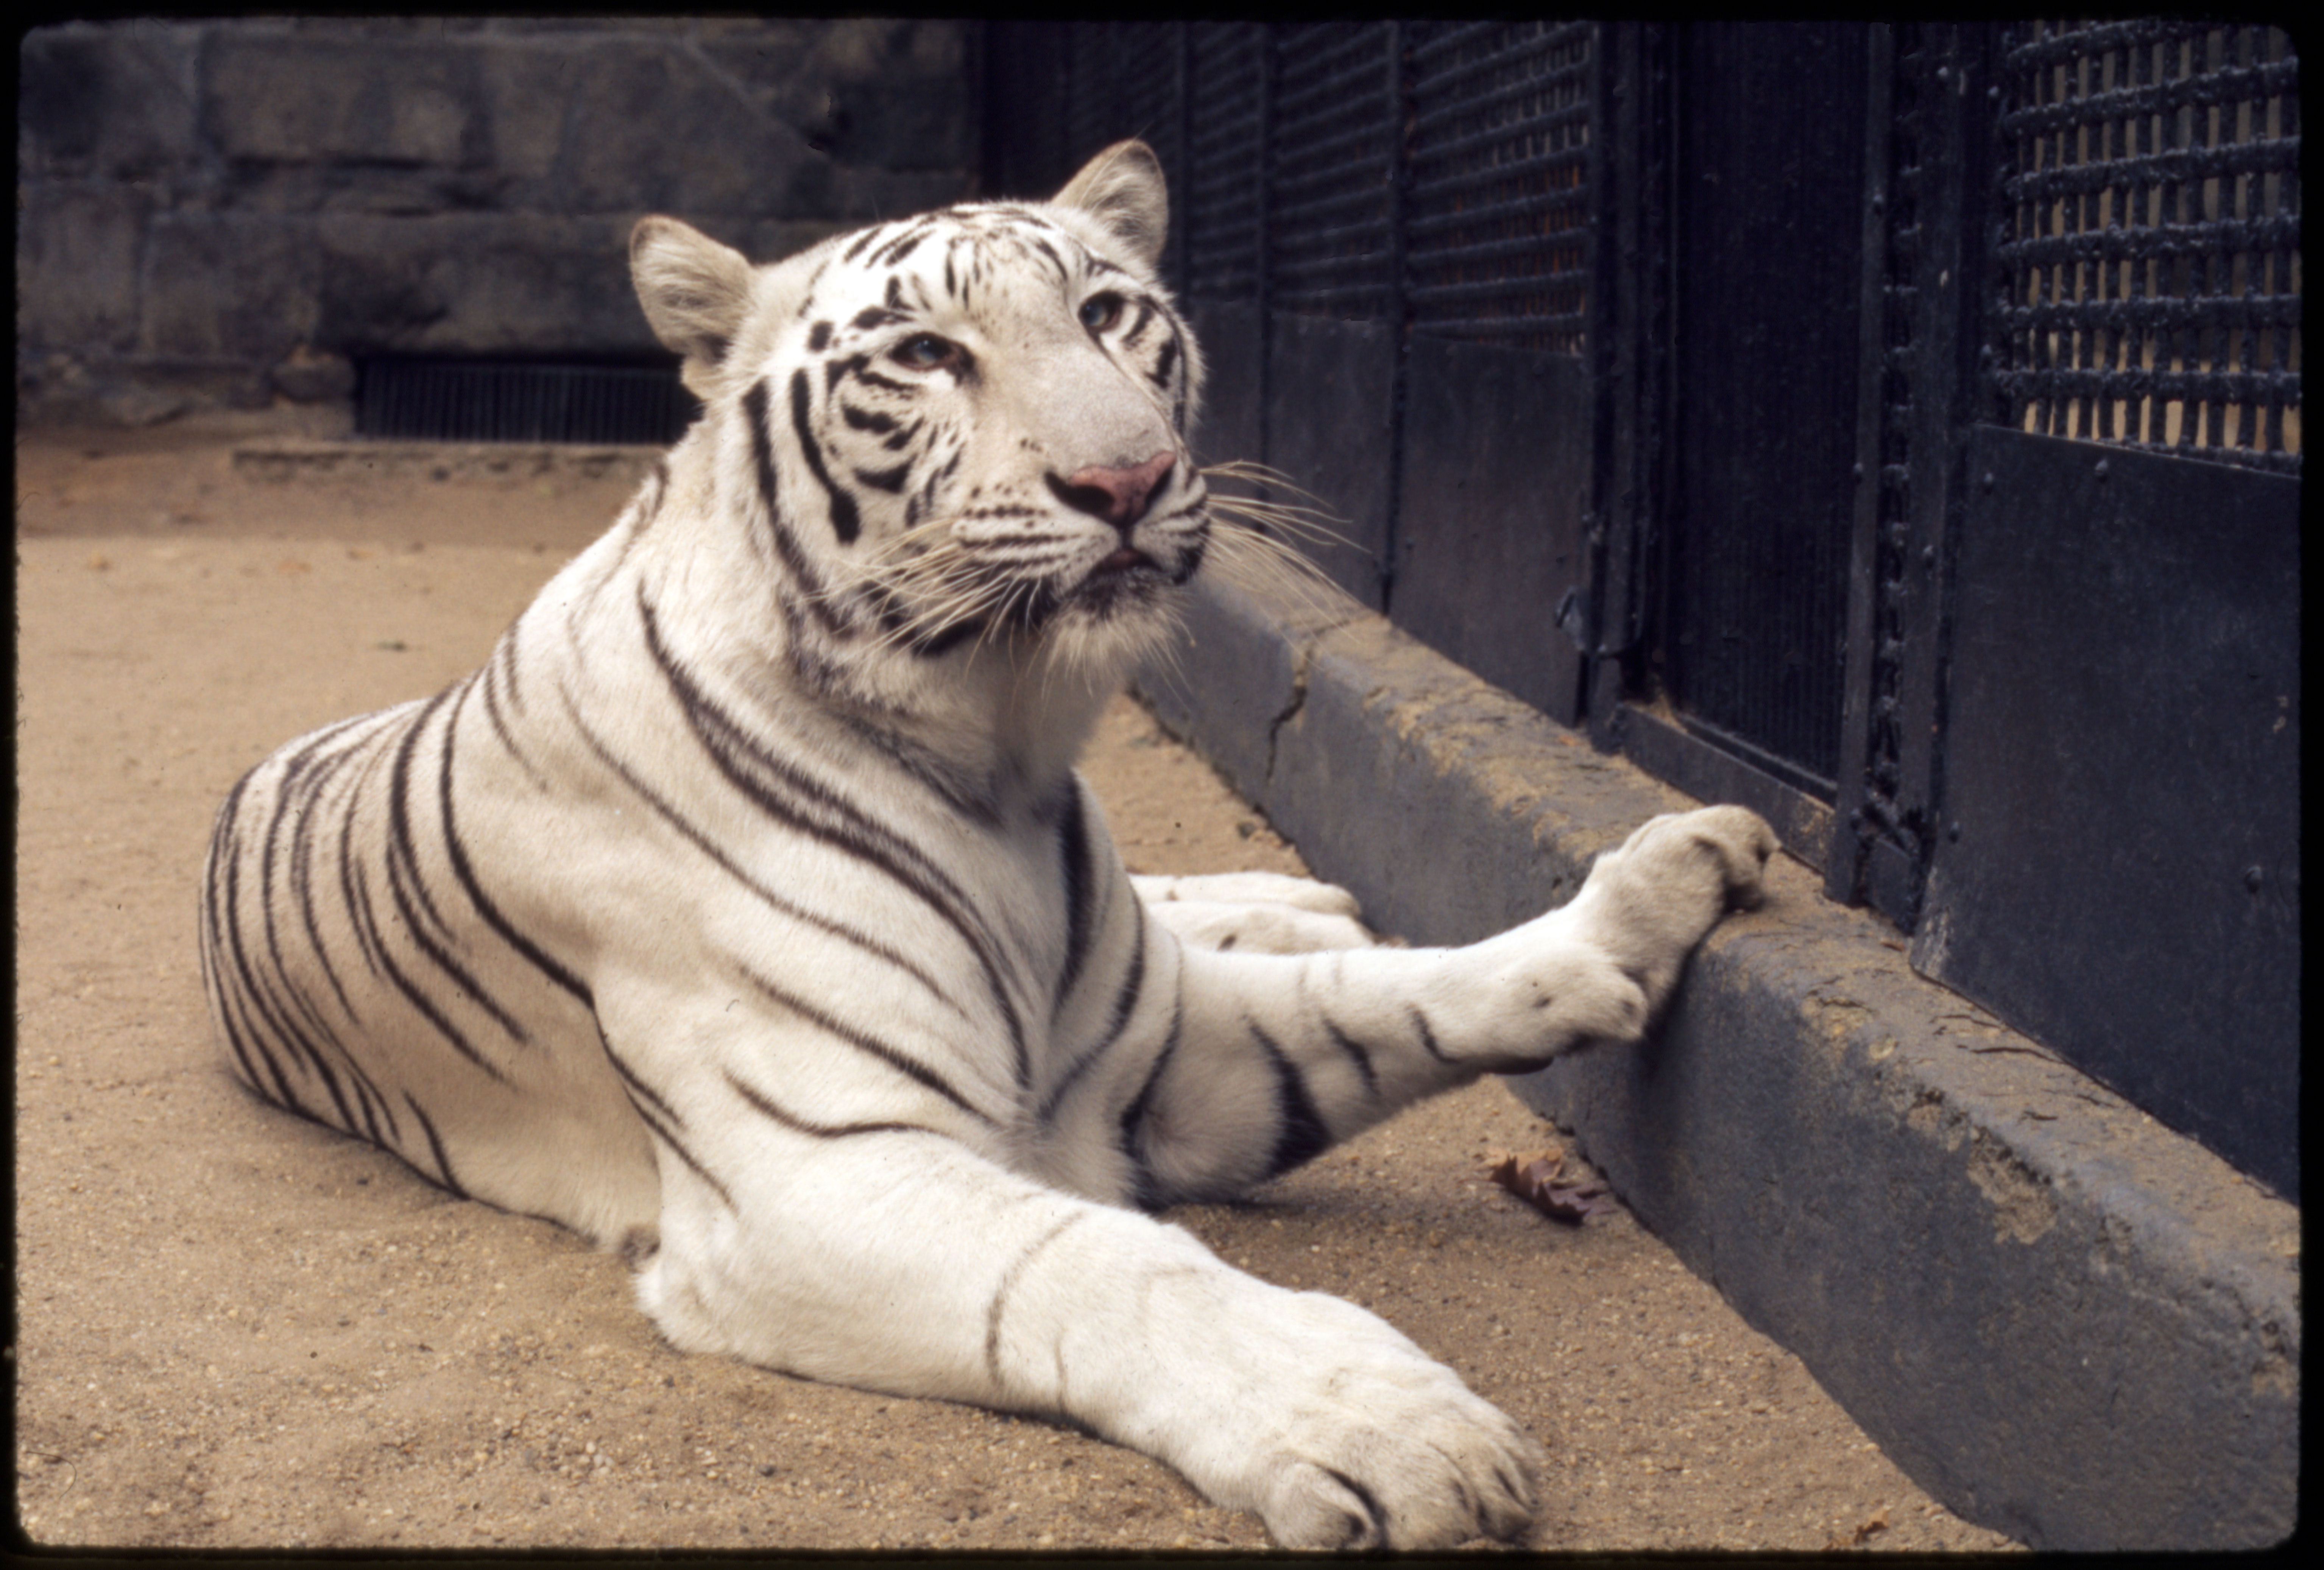 Female White Tiger (Tigress) "Rewati" at National Zoological Park